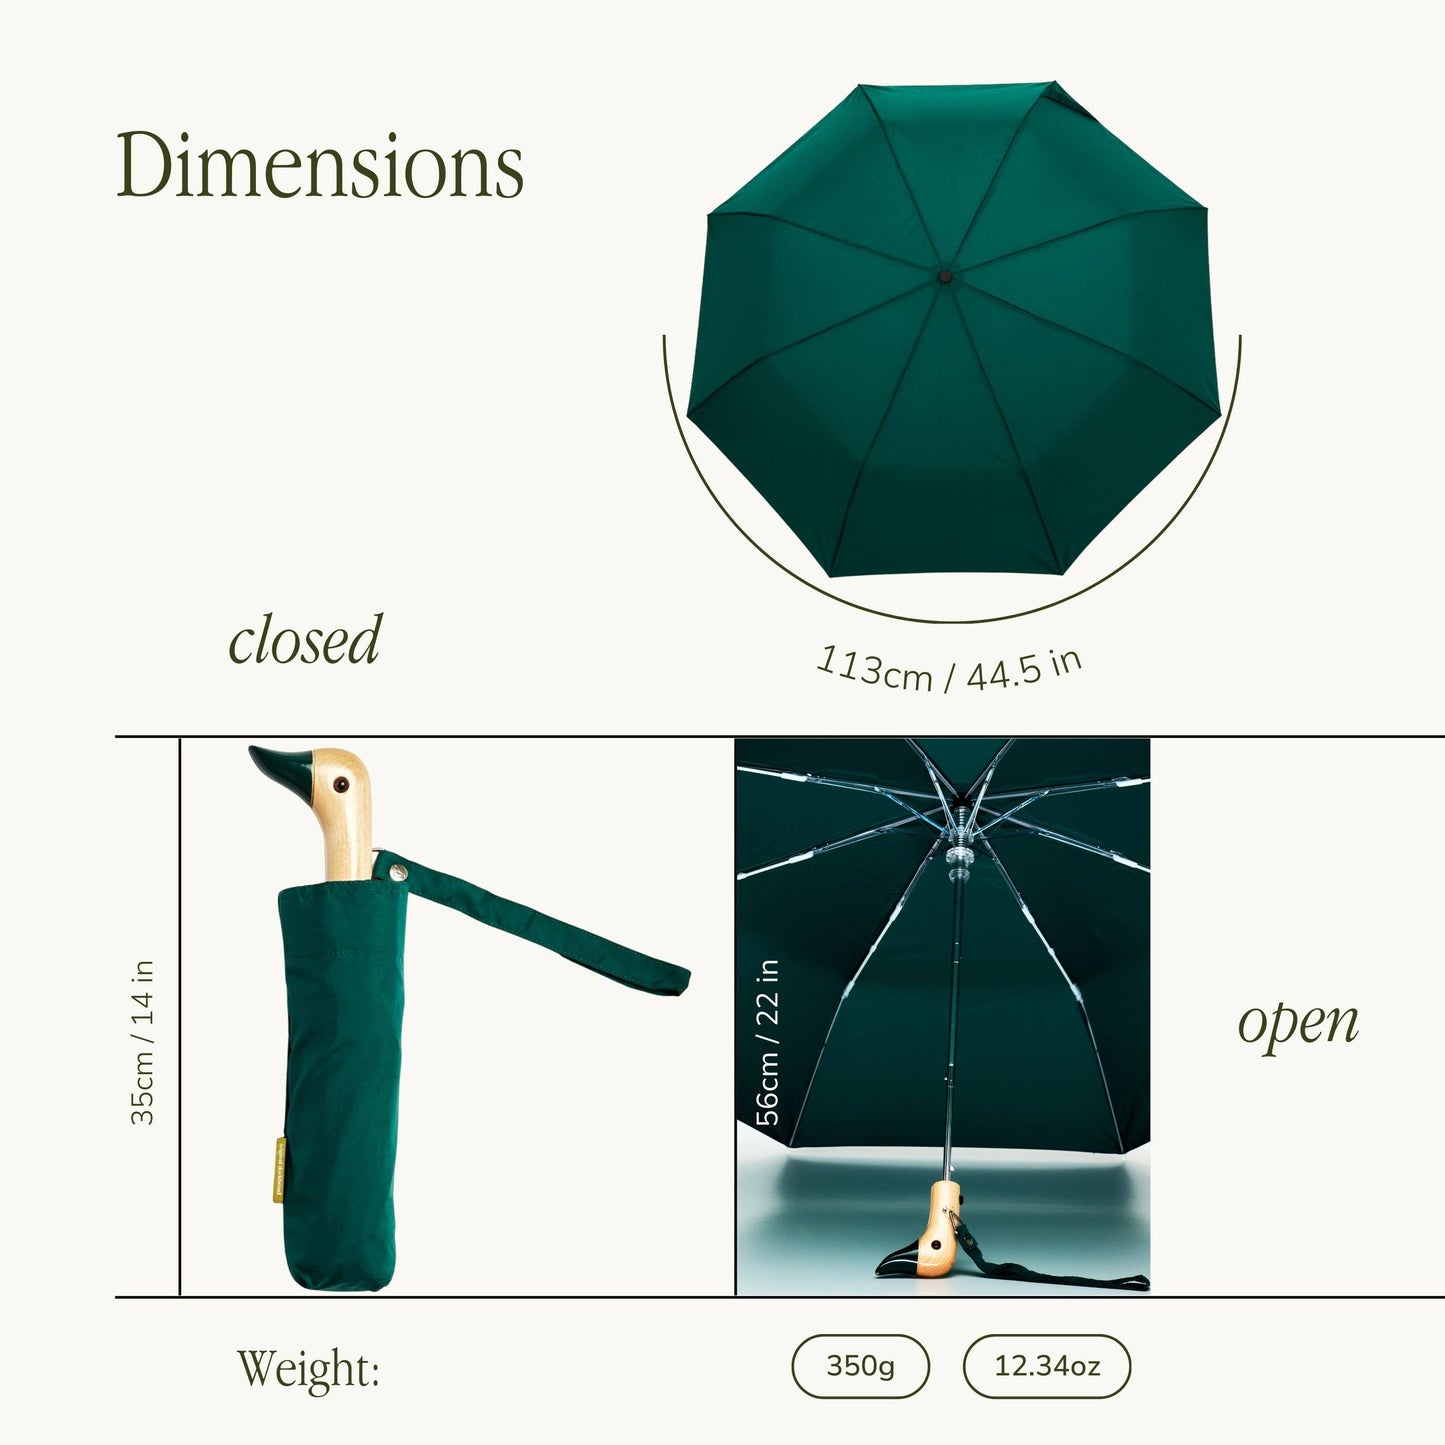 Green Forest Compact Umbrella